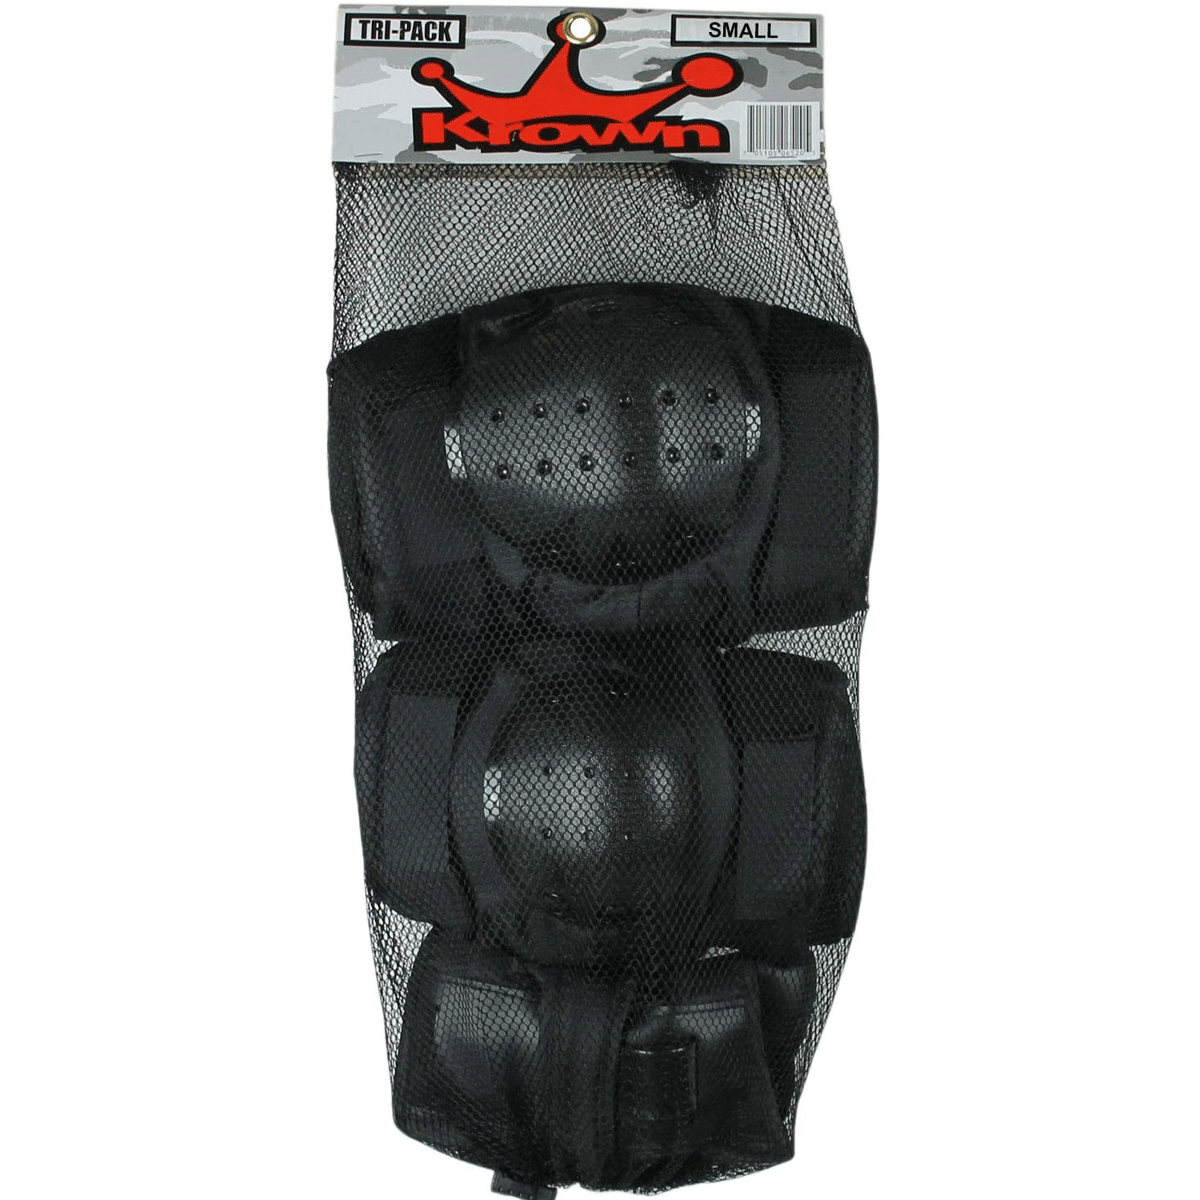 Salomon Inline Skating Wrist Guards & Knee Pads NEW Protective 2 Pack  NIP 